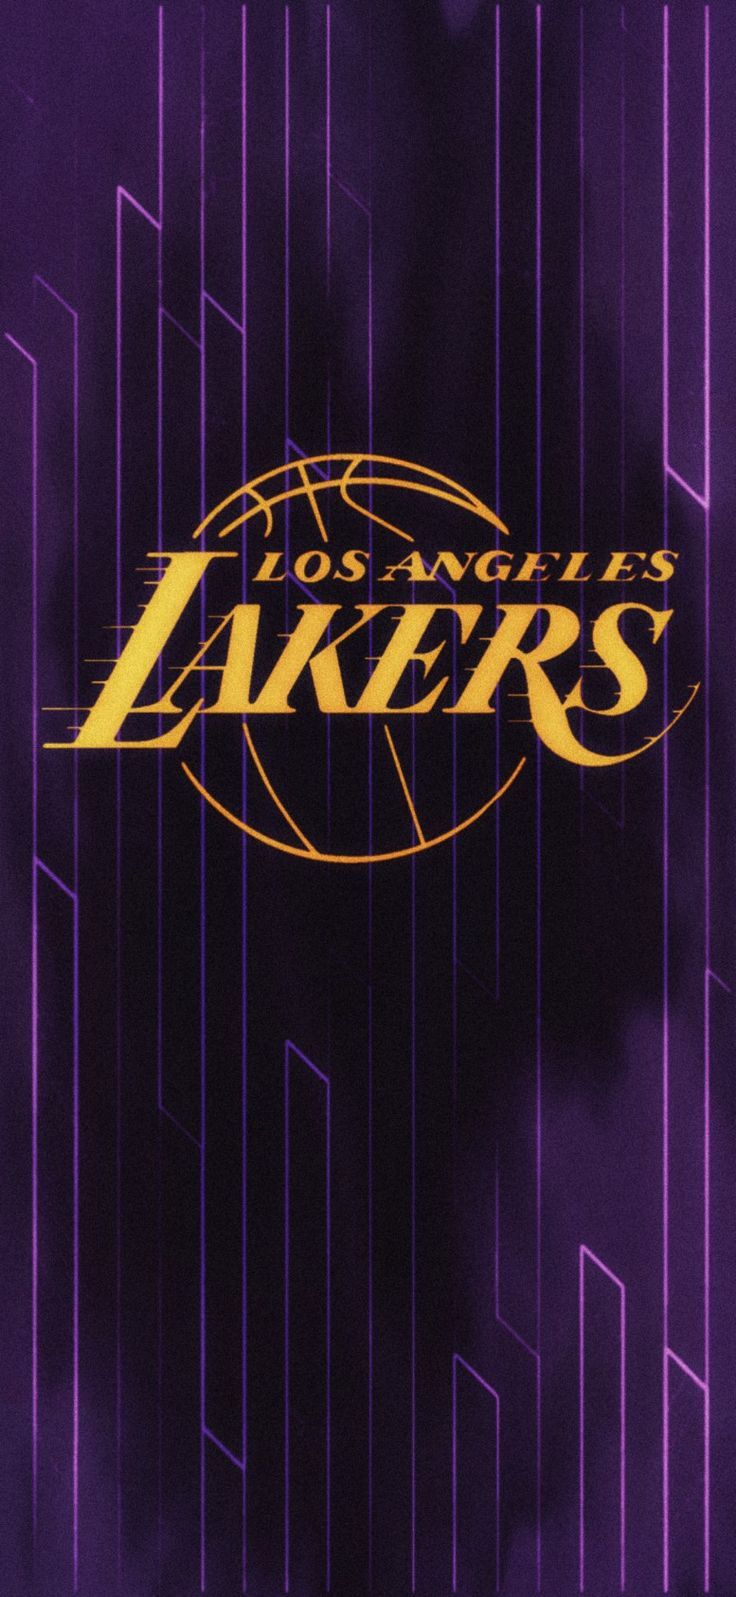 Los Angeles Lakers. Lakers wallpaper, Lakers, Los angeles lakers